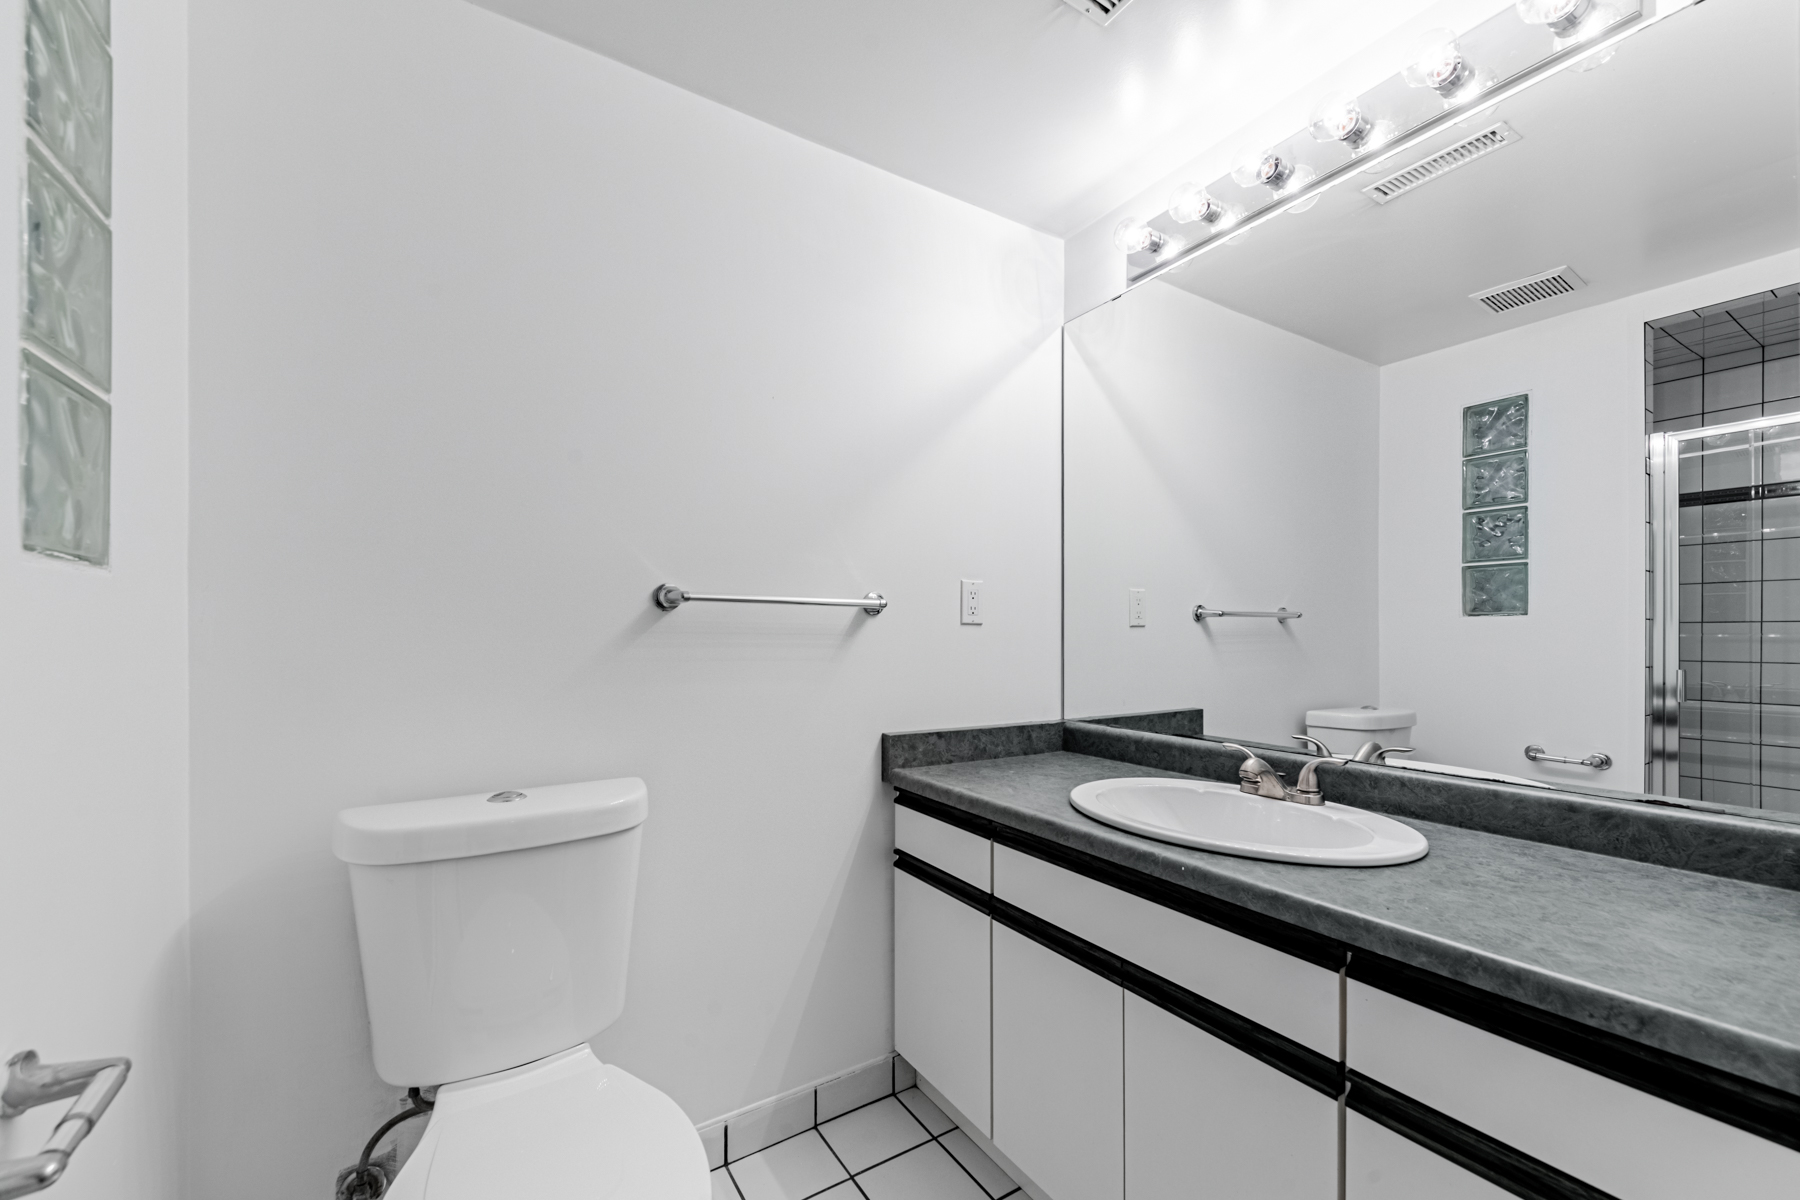 36 Earlton Rd 3-piece bathroom with built-in vanity and ceramic floors.